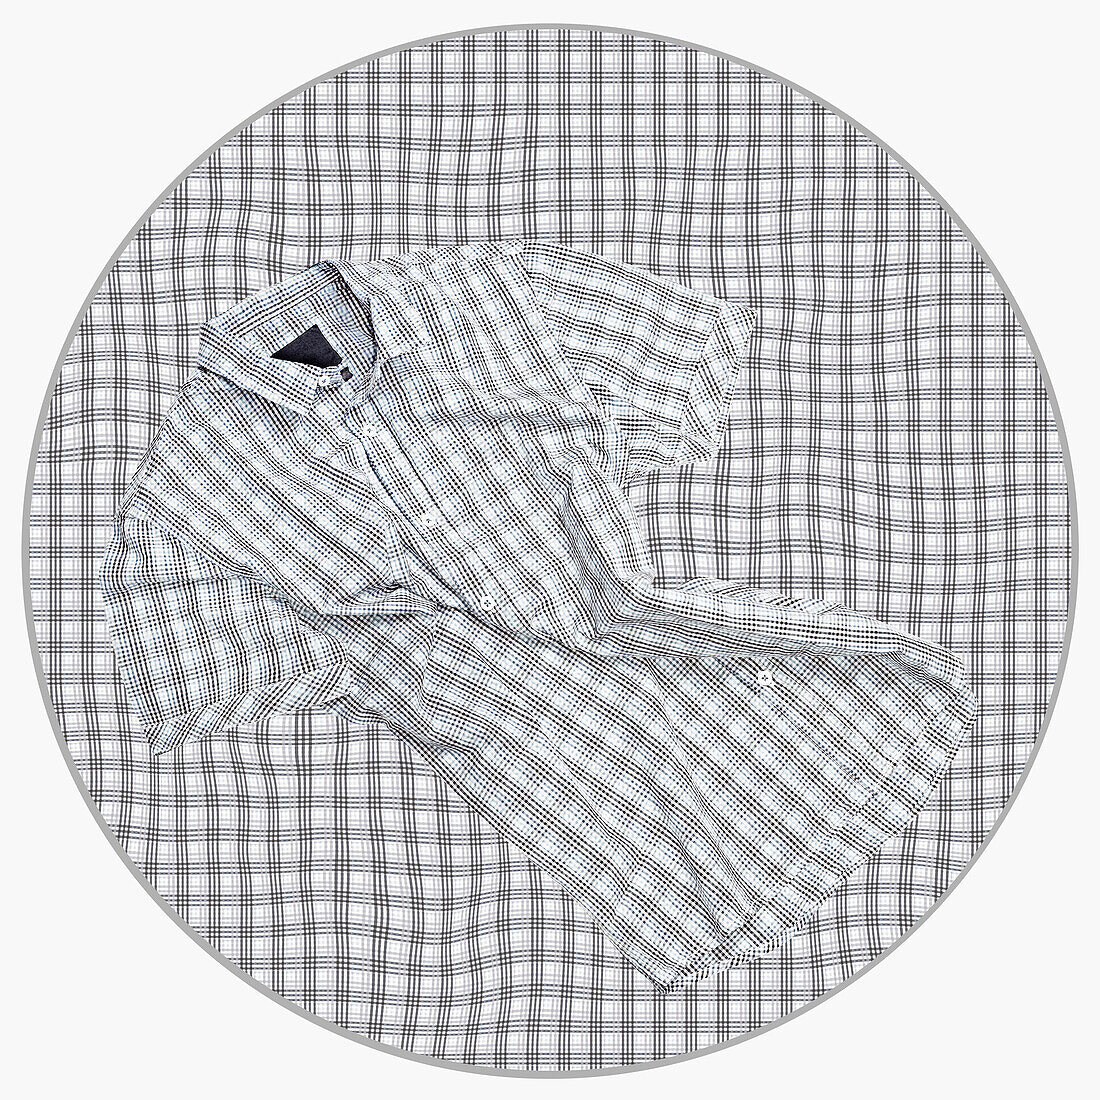 Checkered shirt on matching fabric